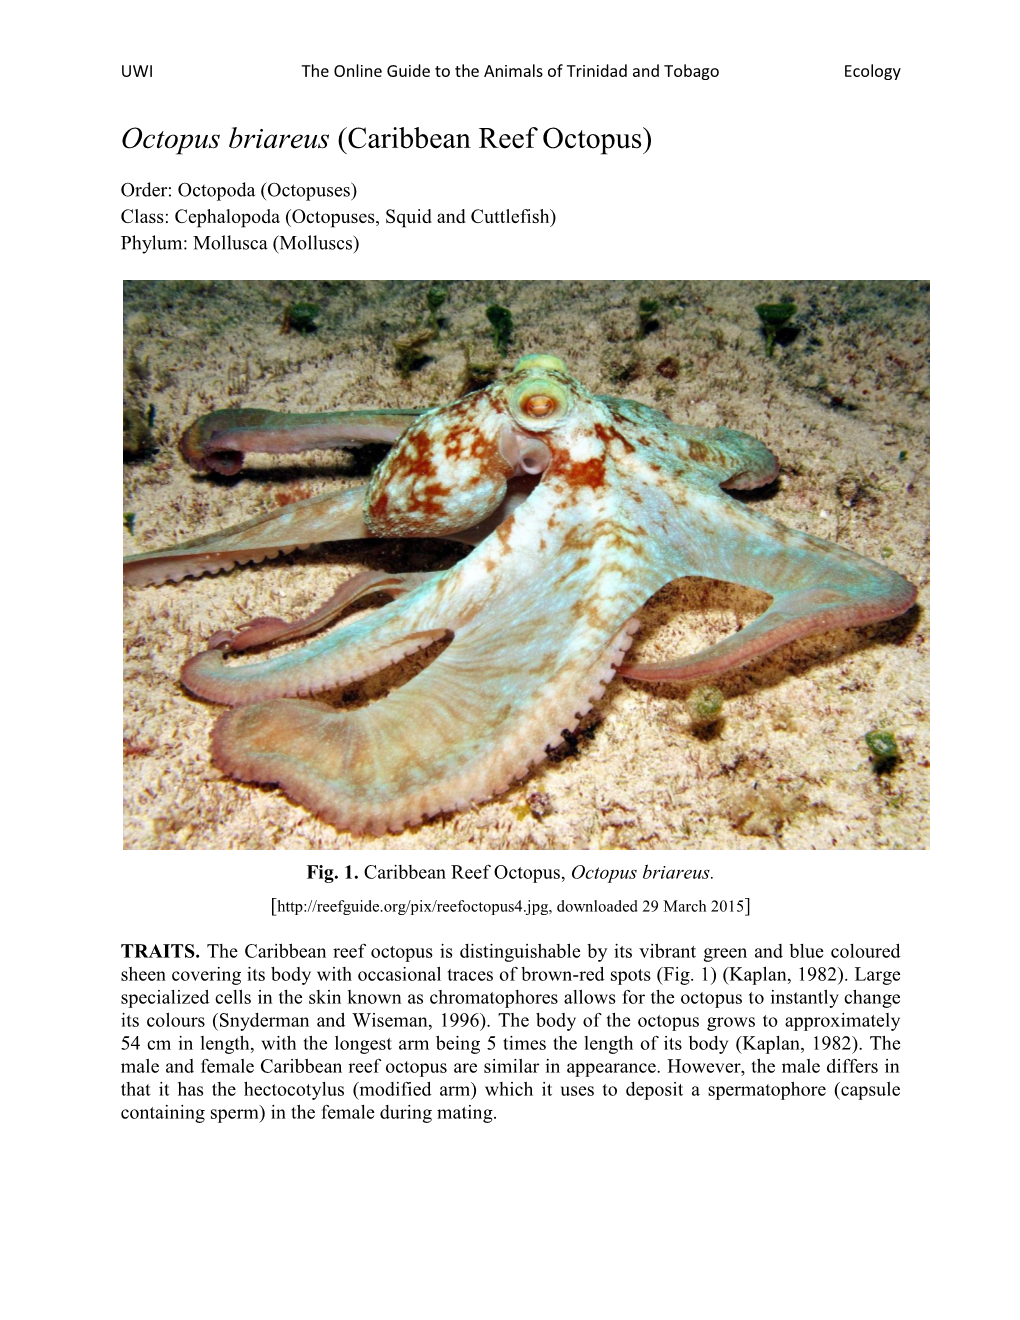 Caribbean Reef Octopus)